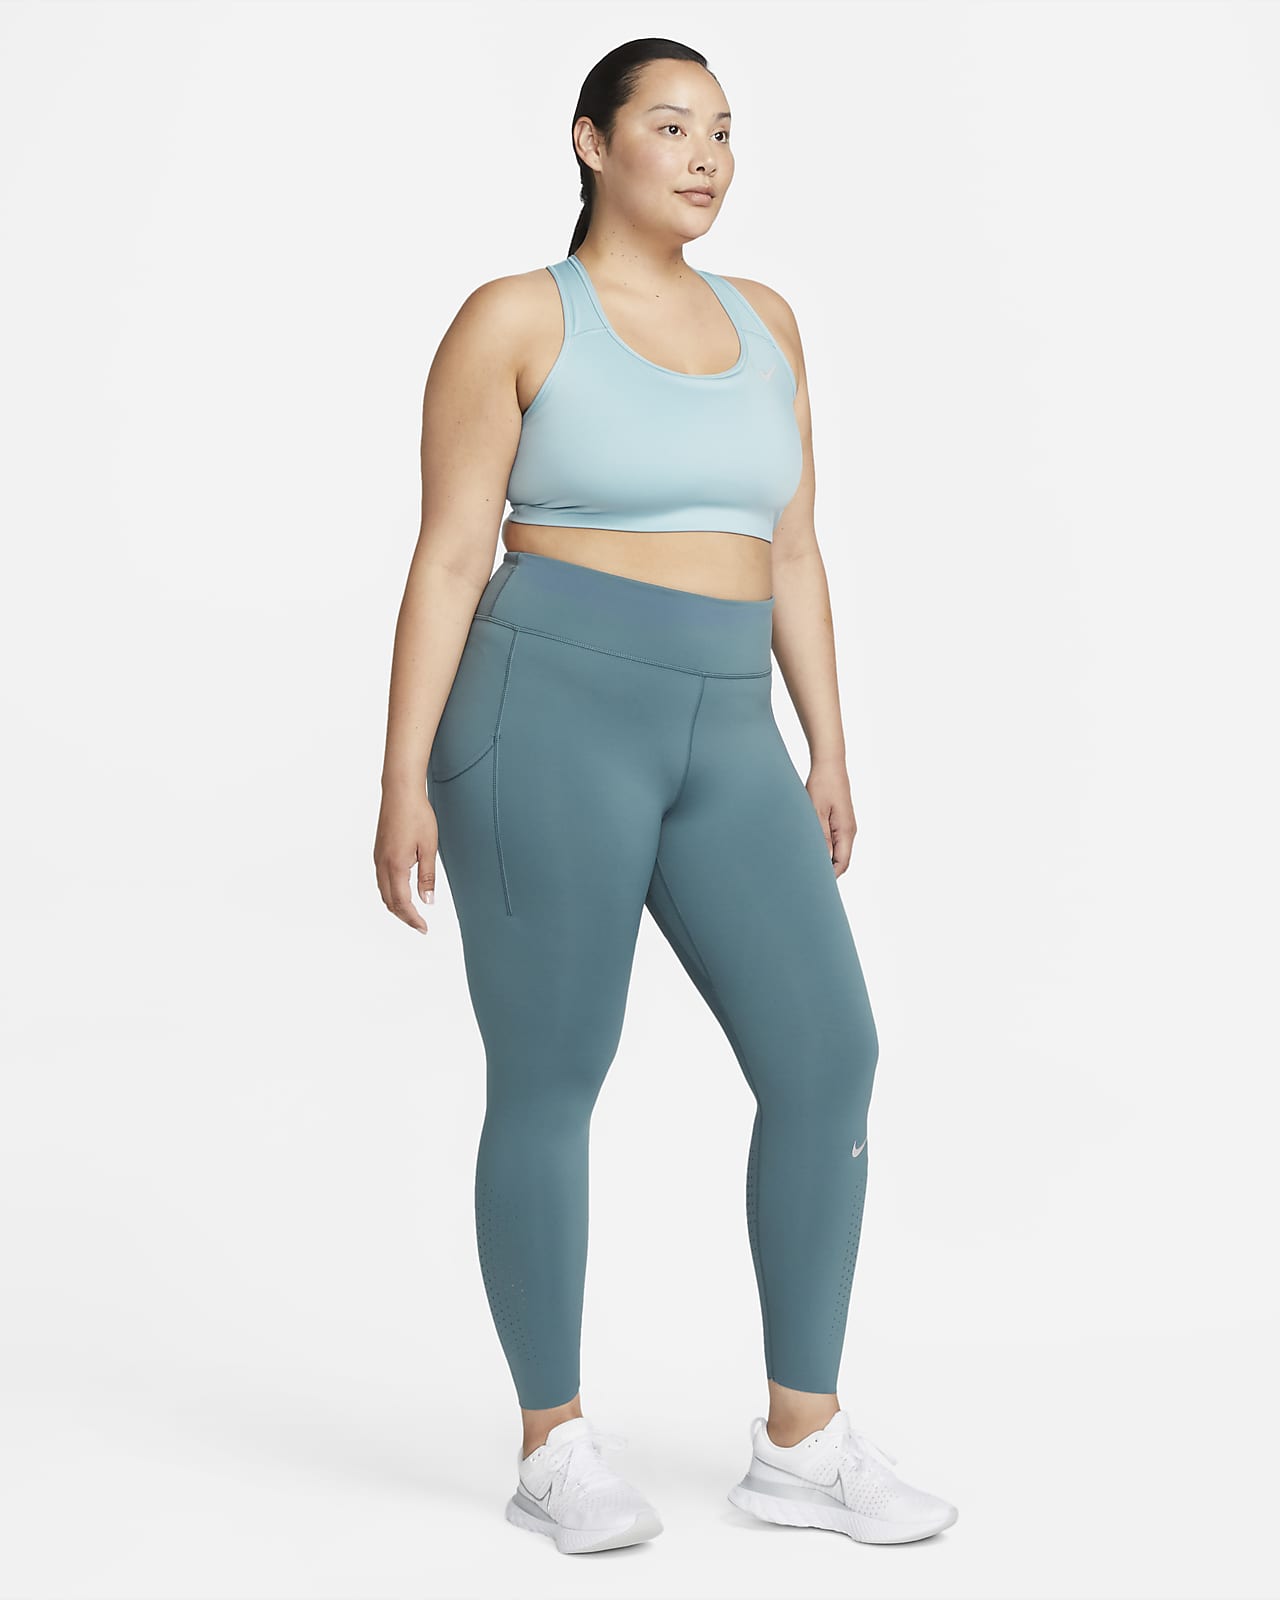 Nike women's size XXL Allin athletic running leggings mid rise